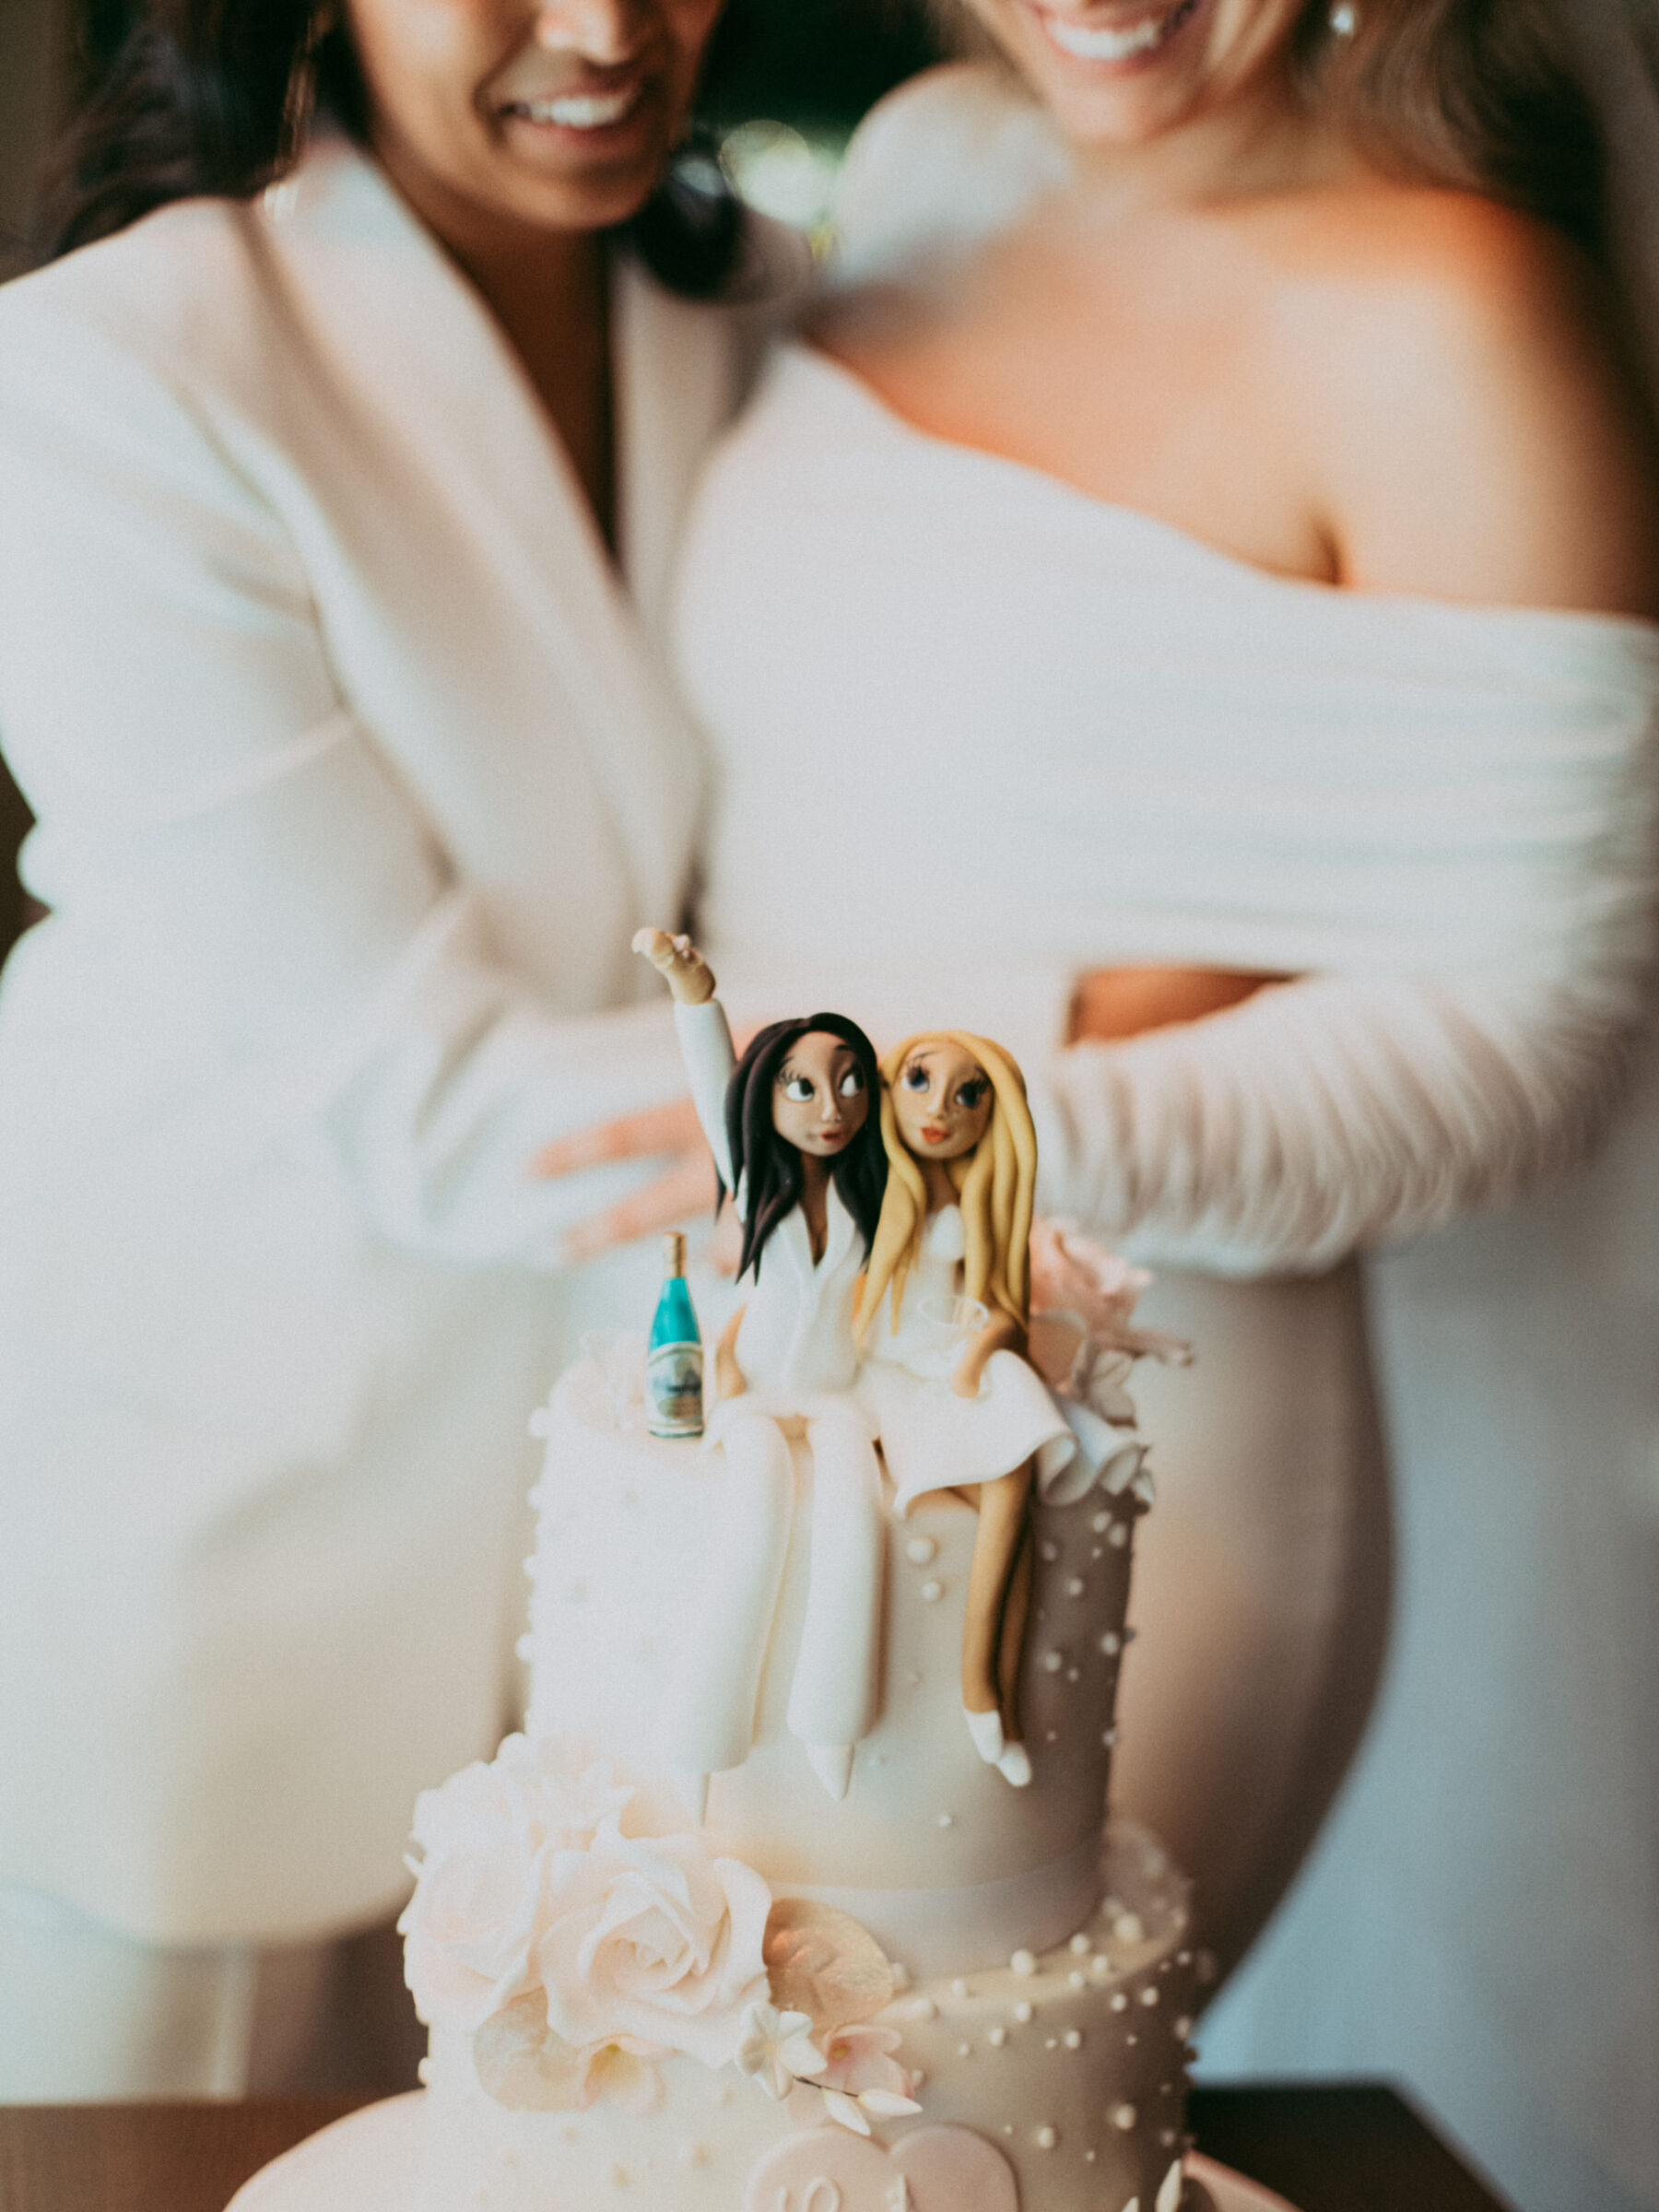 Lesbian bride cake topper.  Daniel Mice Photography.